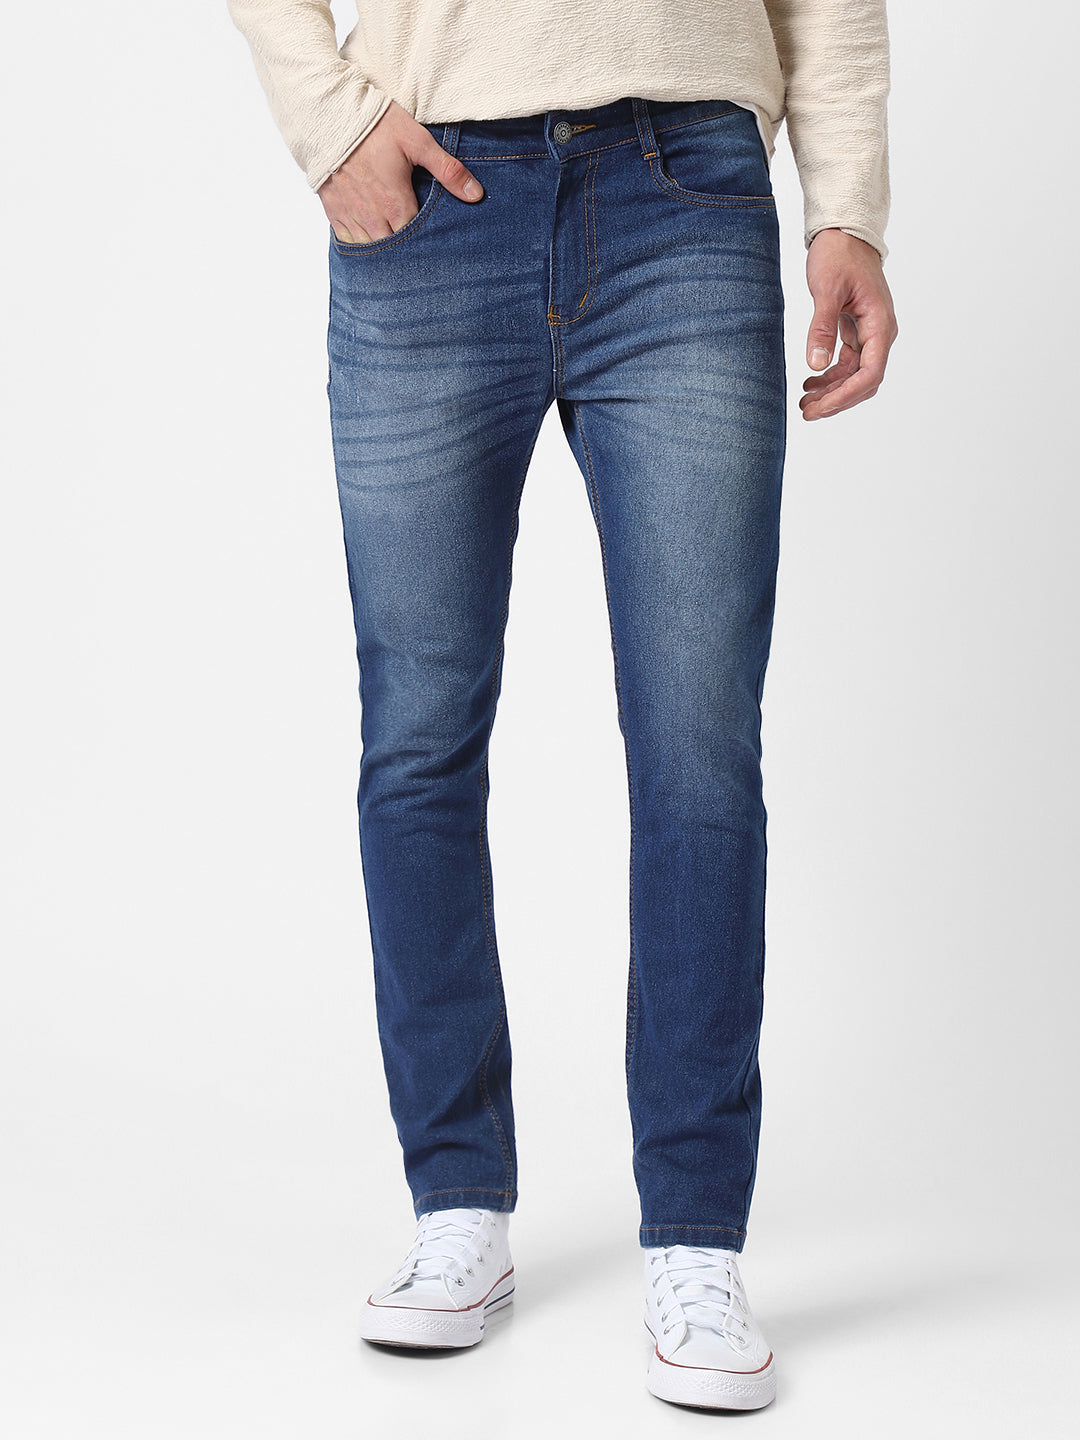 Men's Blue Slim Fit Mild Distressed/Torn Jeans Stretchable